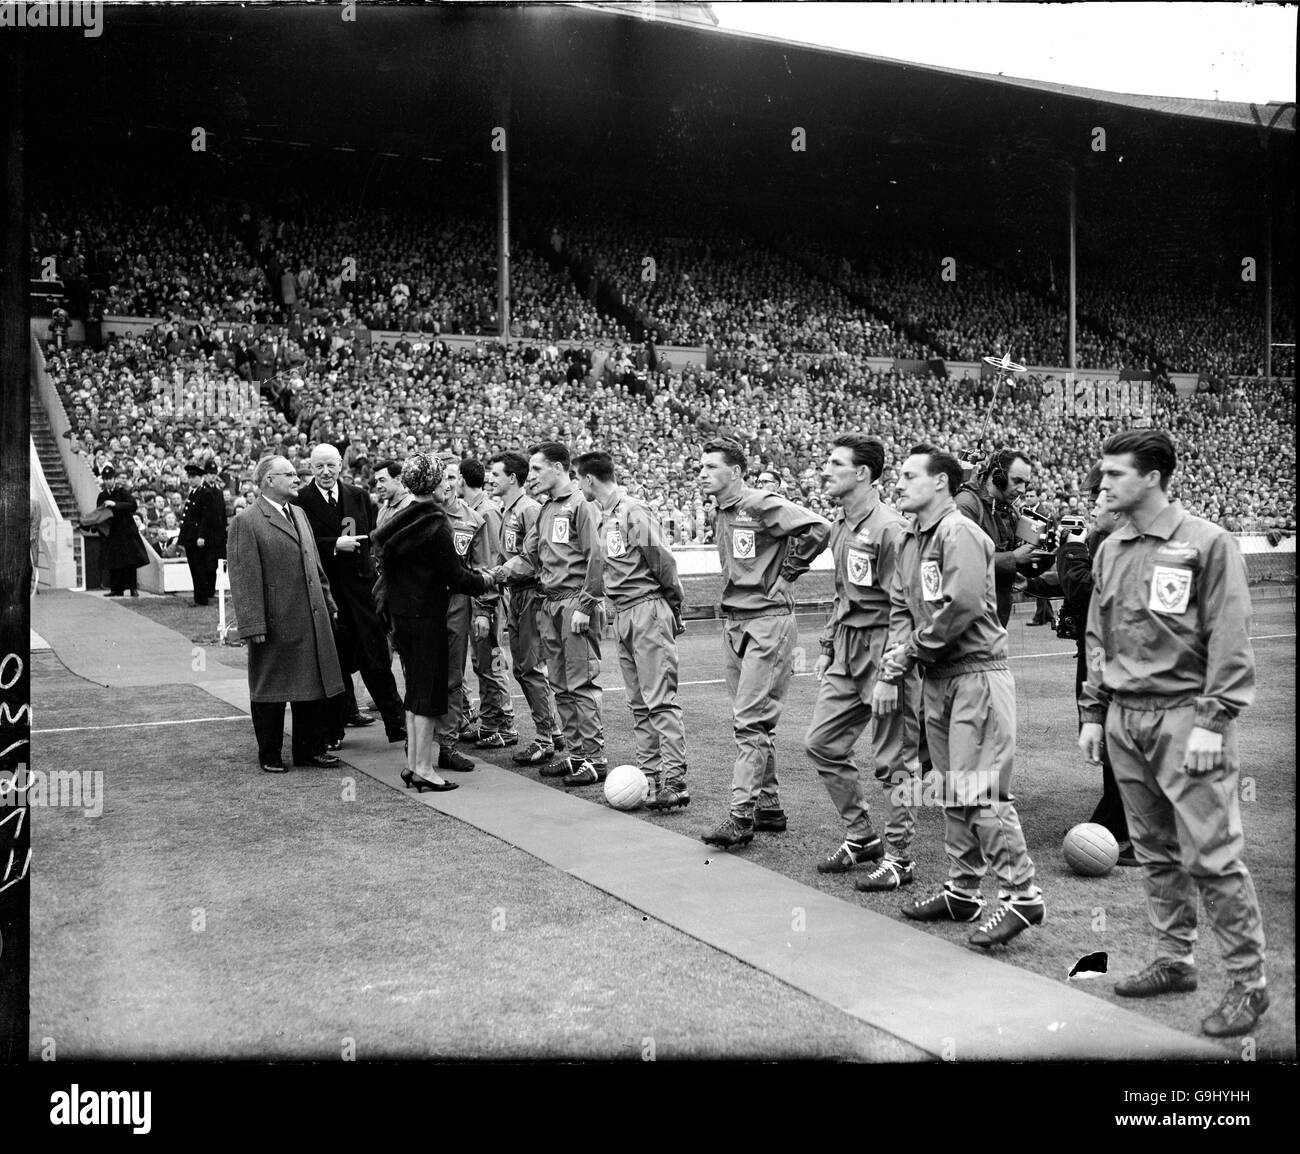 Fútbol - FA Cup - Final - Tottenham Hotspur contra Leicester City. La duquesa de Kent se presenta a los jugadores de Leicester City antes del partido Foto de stock